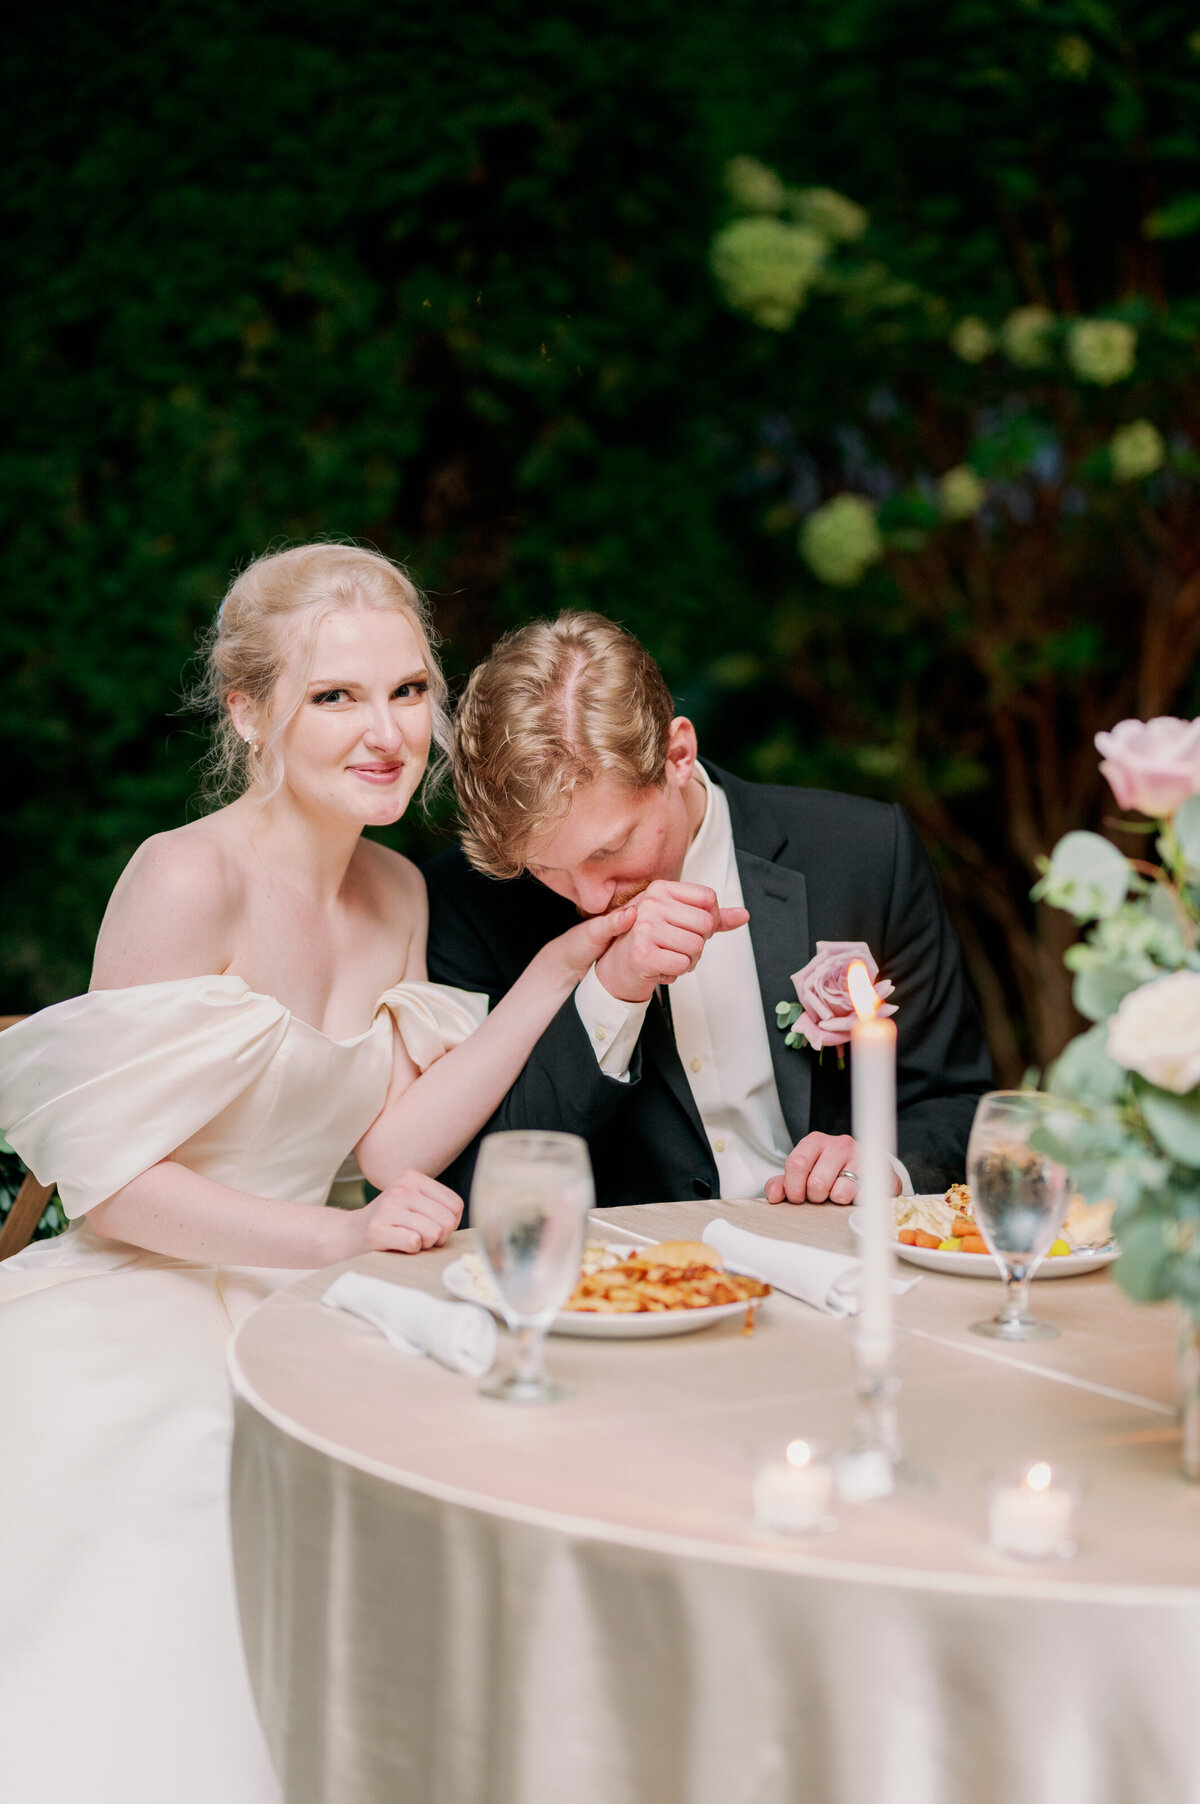 Hannah & Harrison - Dara's Garden - East Tennessee Wedding Photographer - Alaina René Photography-197